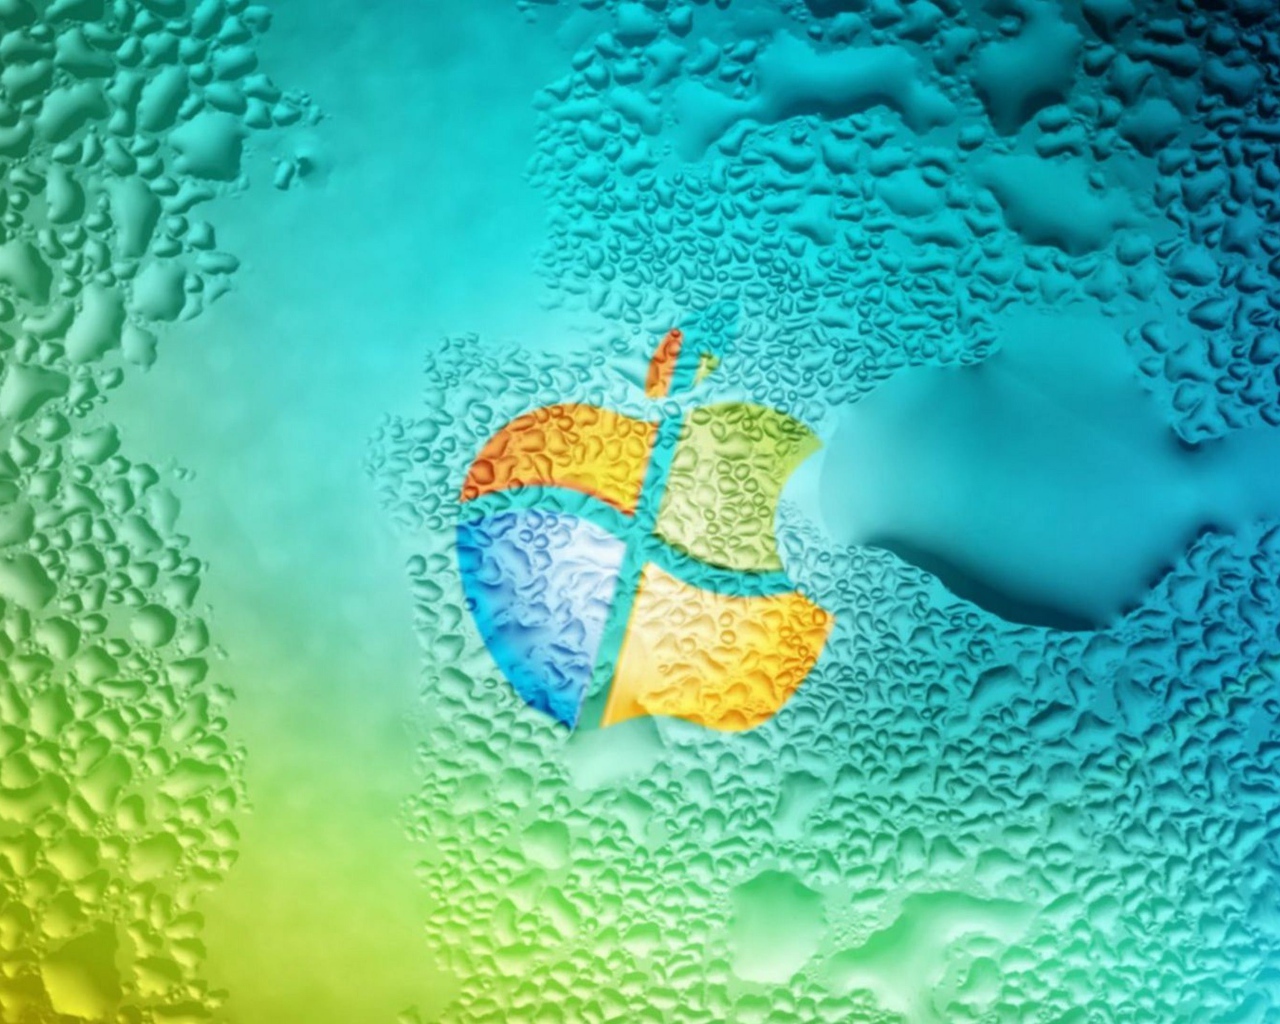 Windows icon on wet surface